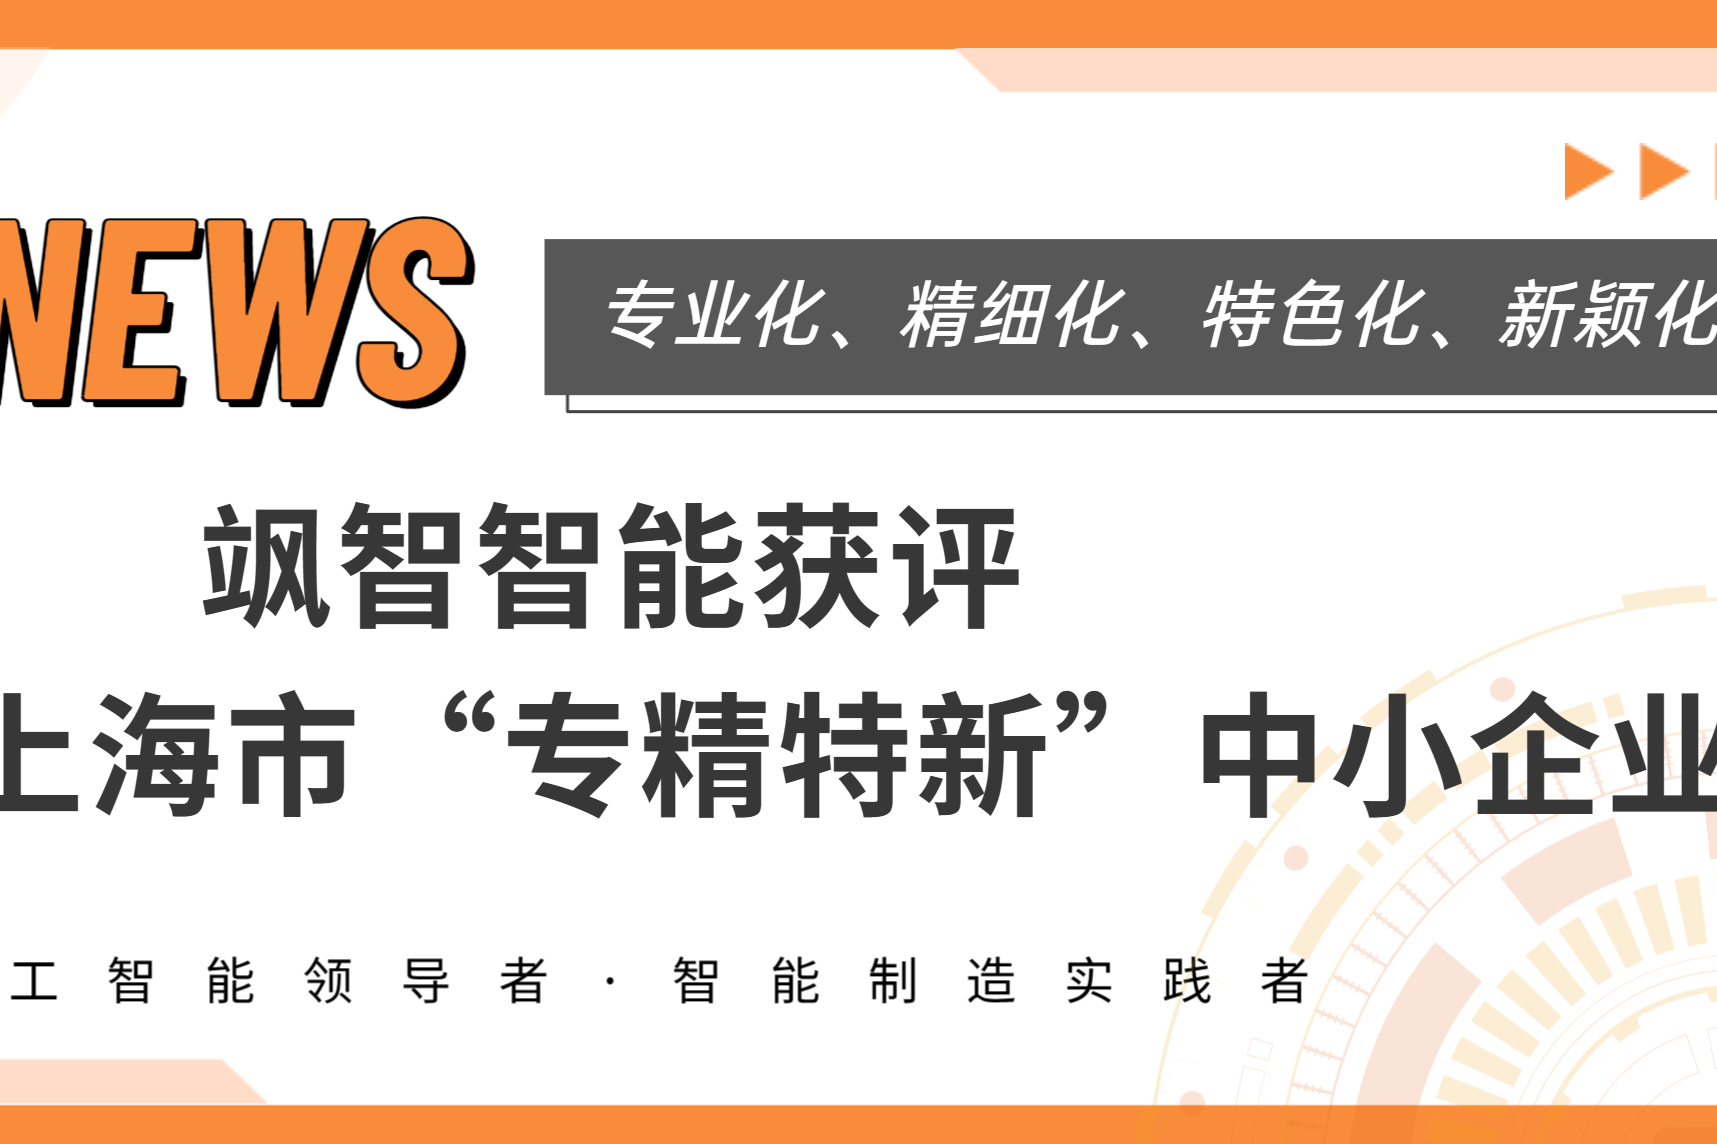  2138cn太阳集团官网主页获上海市专精特新企业称号！